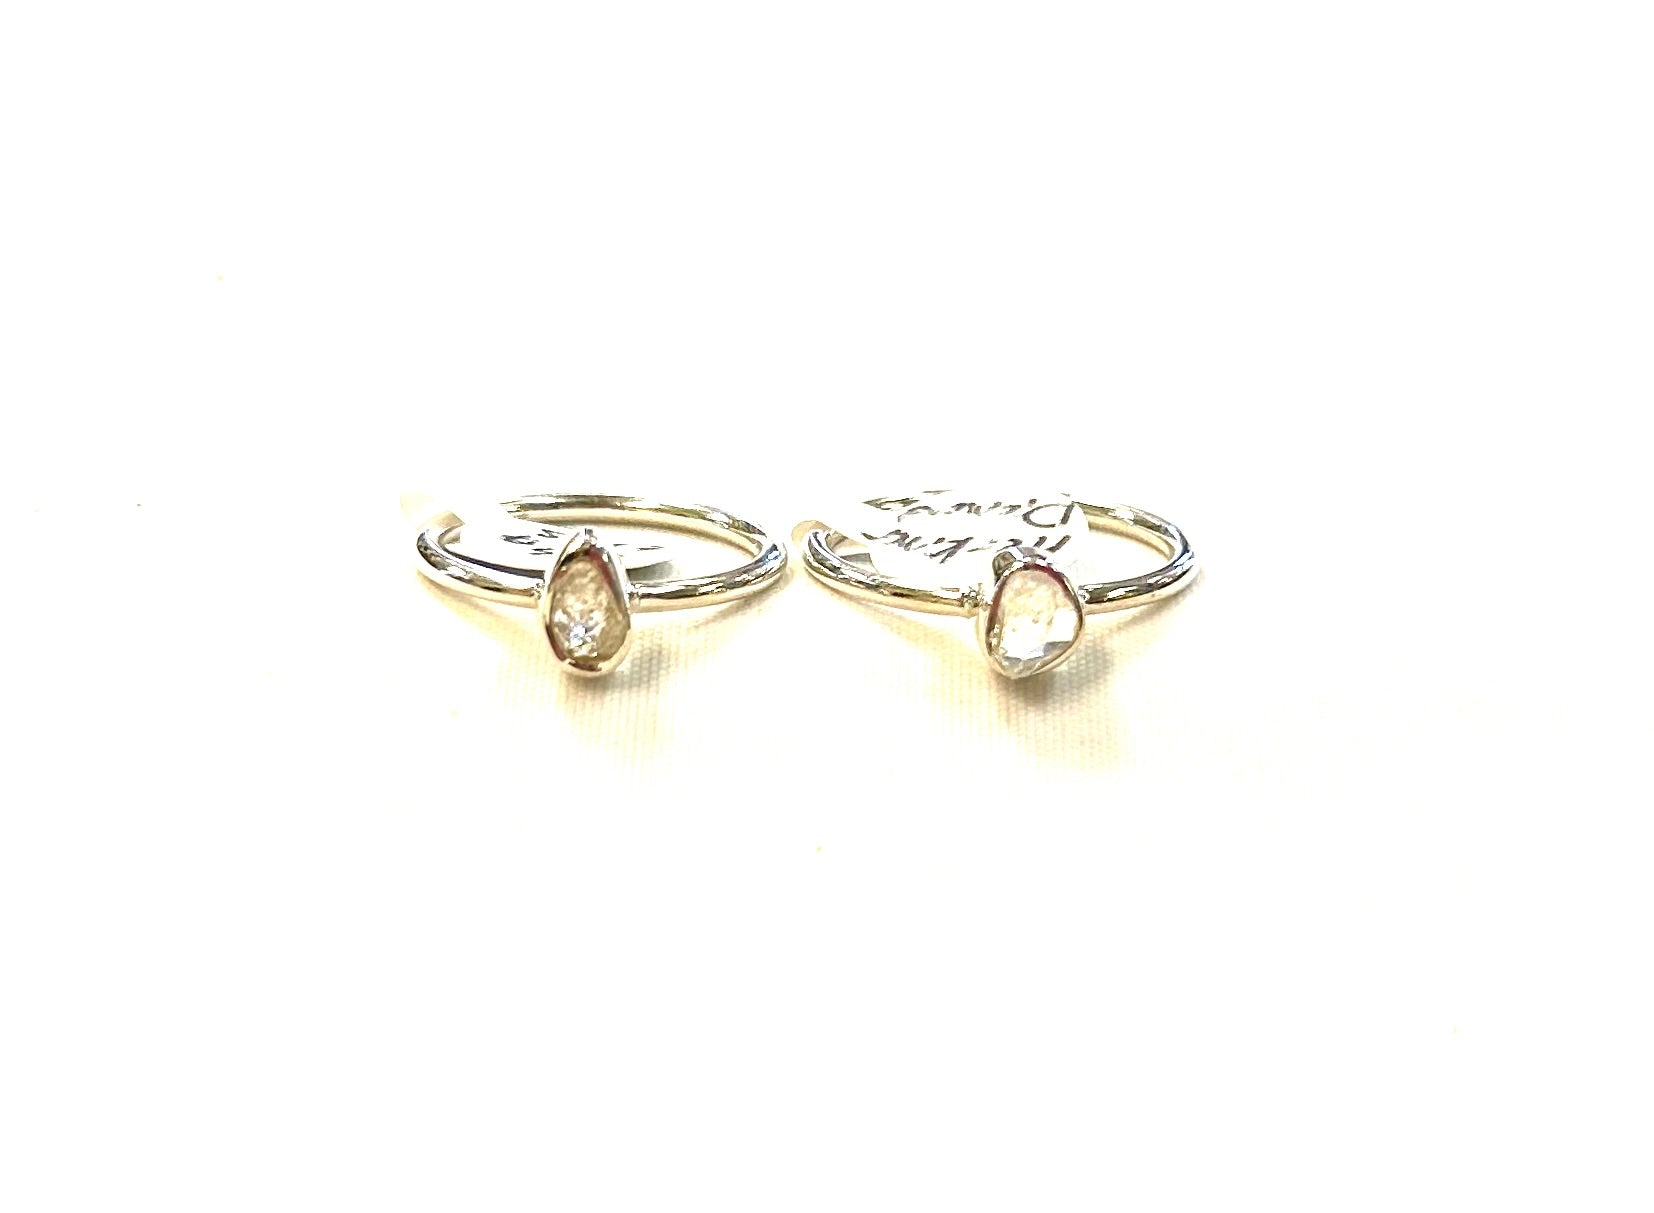 Herkimer Diamond Ring - Lighten Up Shop